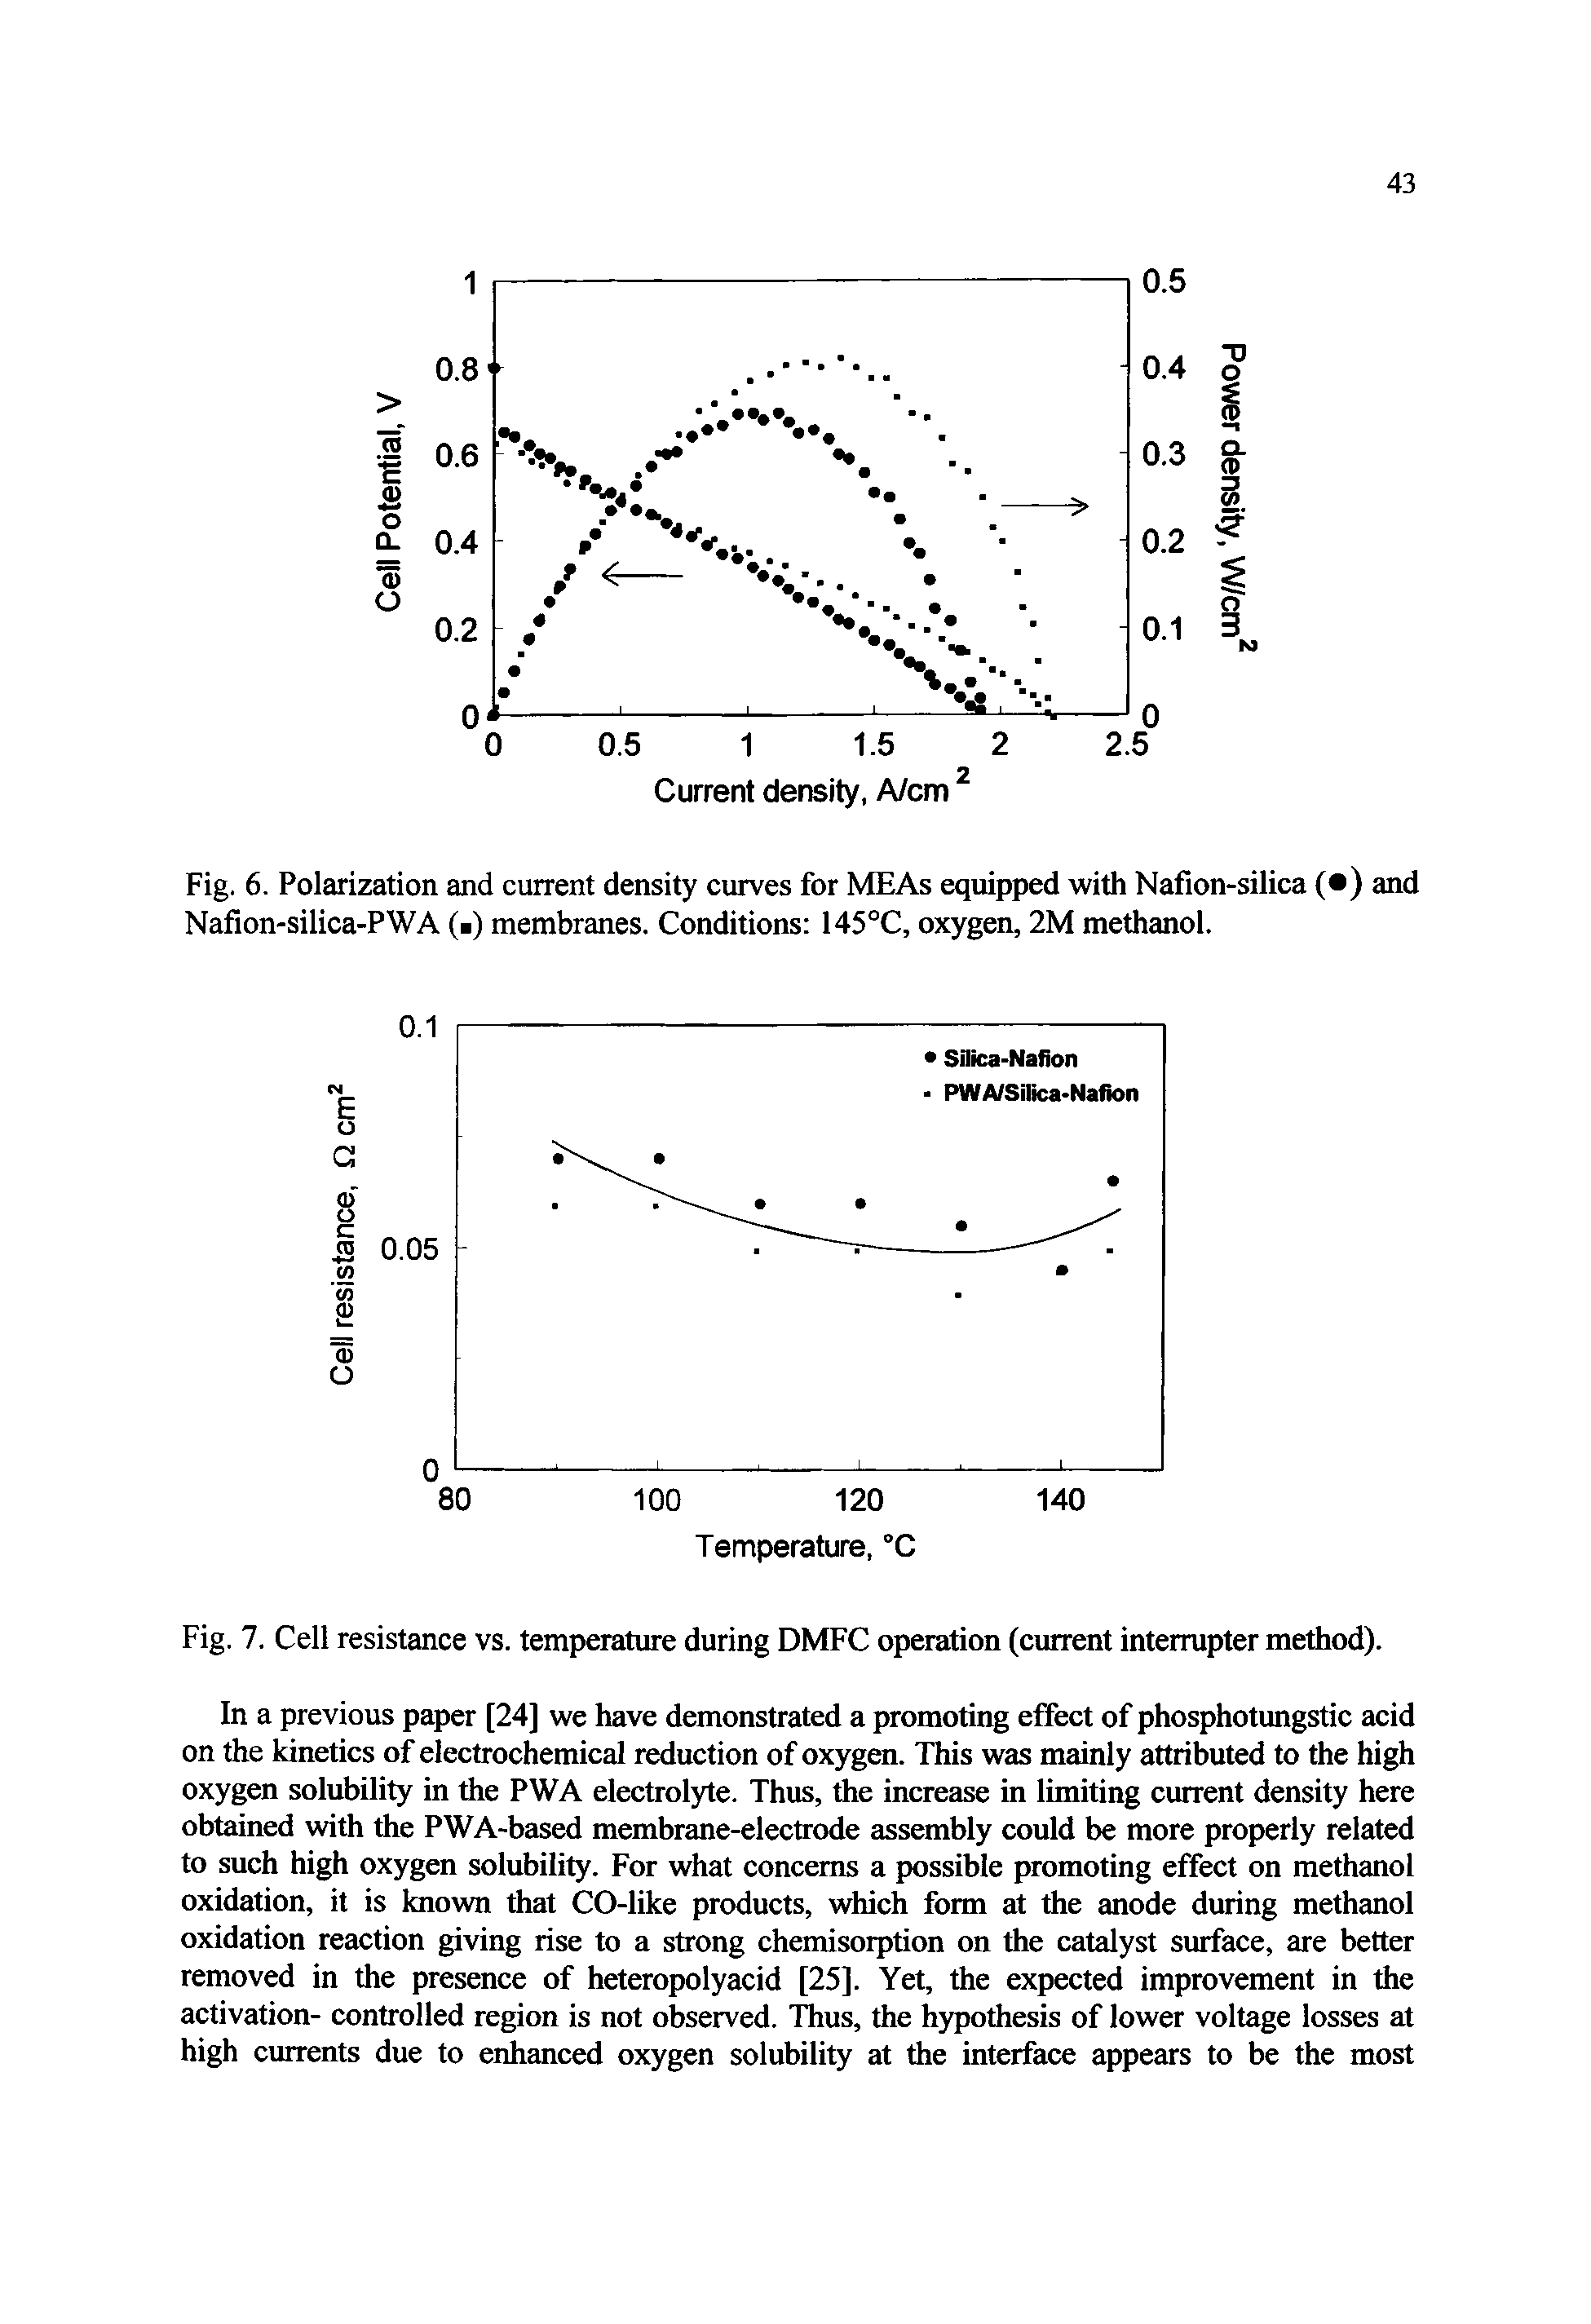 Fig. 7. Cell resistance vs. temperature during DMFC operation (current interrupter method).